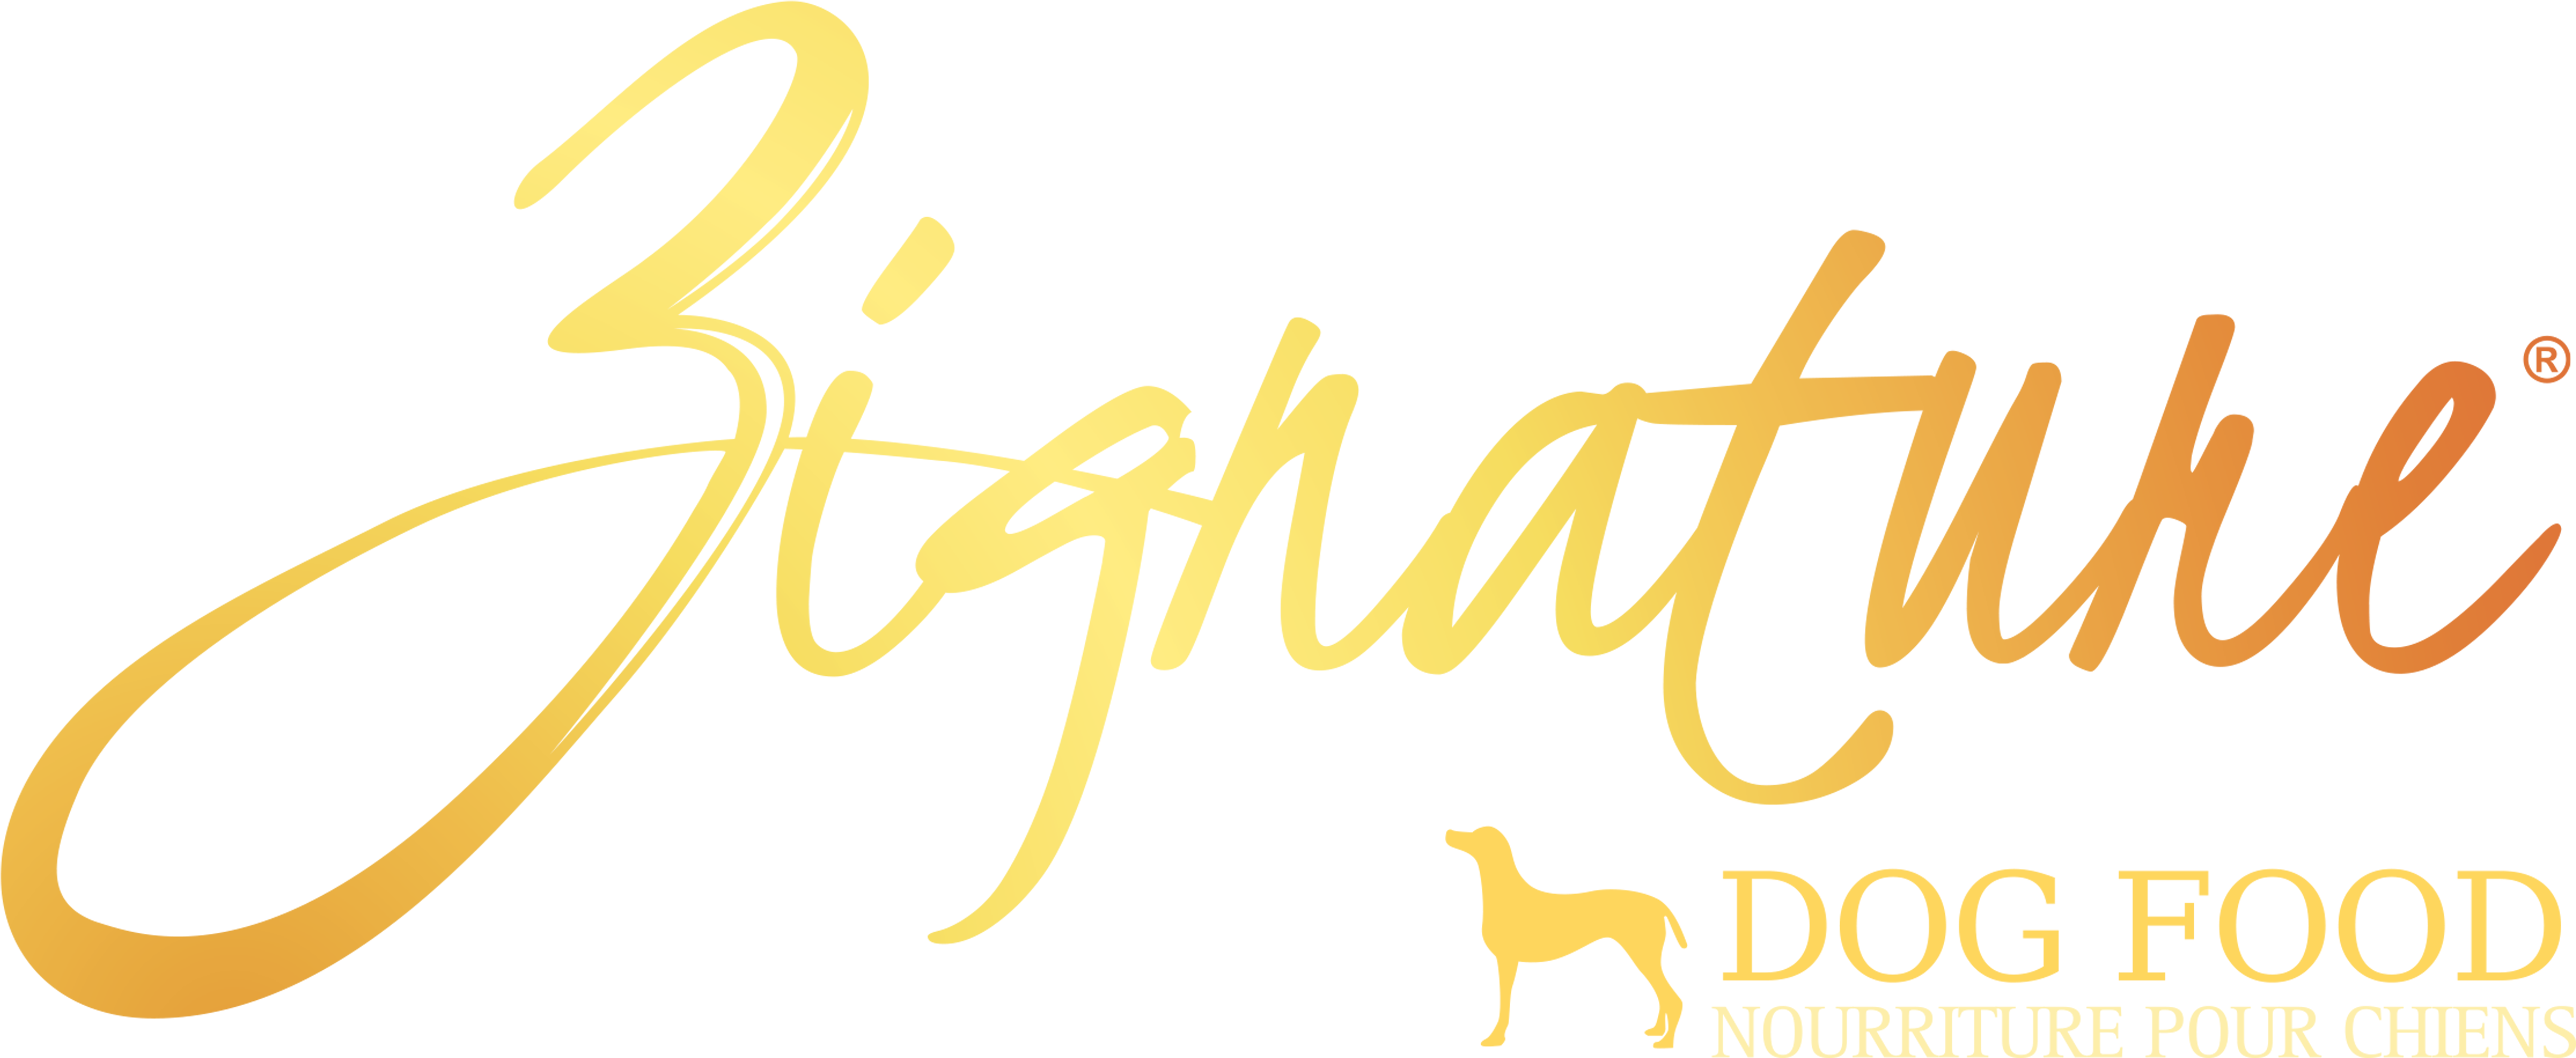 Marketing Zignature Logo Thumb - Zignature Dog Food Logo (6000x2592)